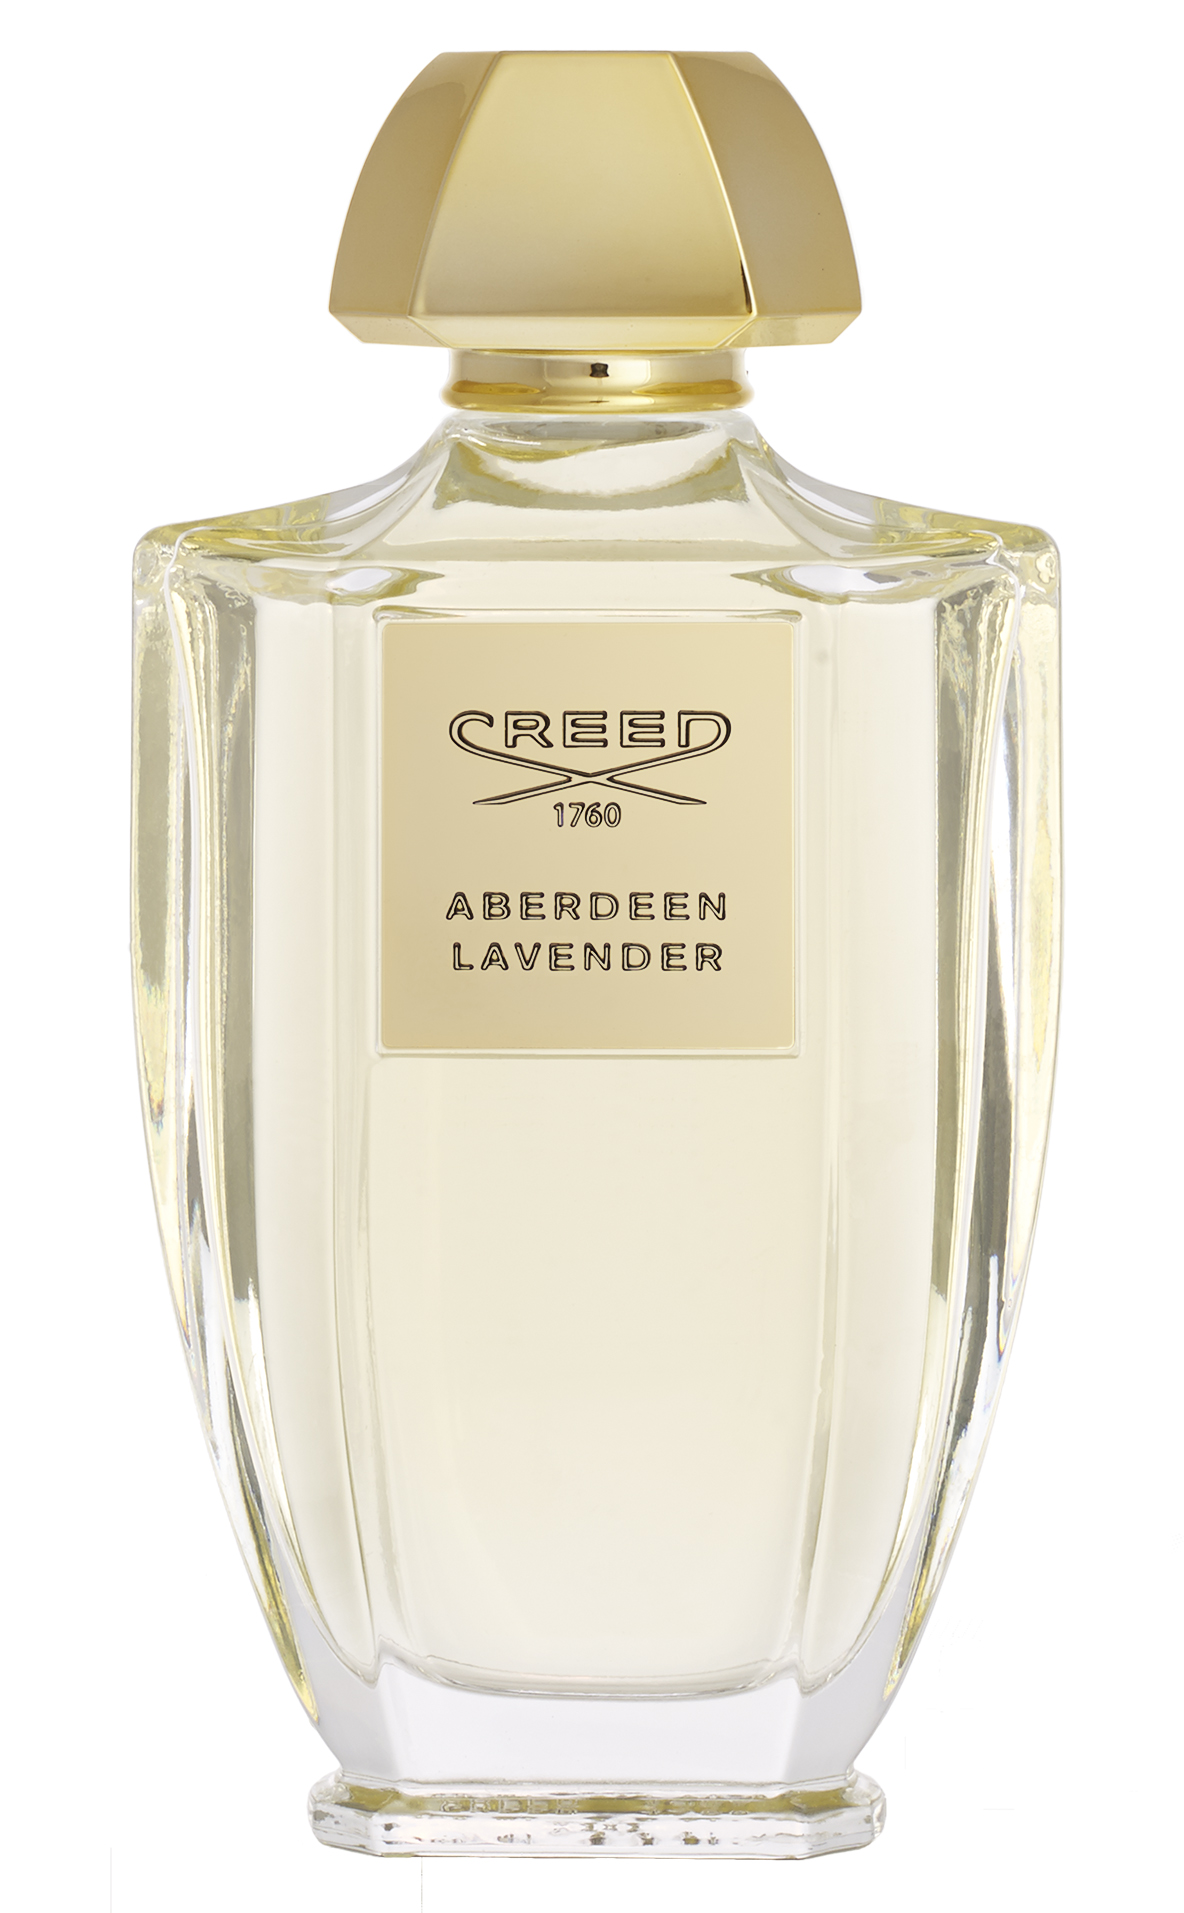 Creed Aberdeen Lavender perfume, £190, creedfragrances.co.uk